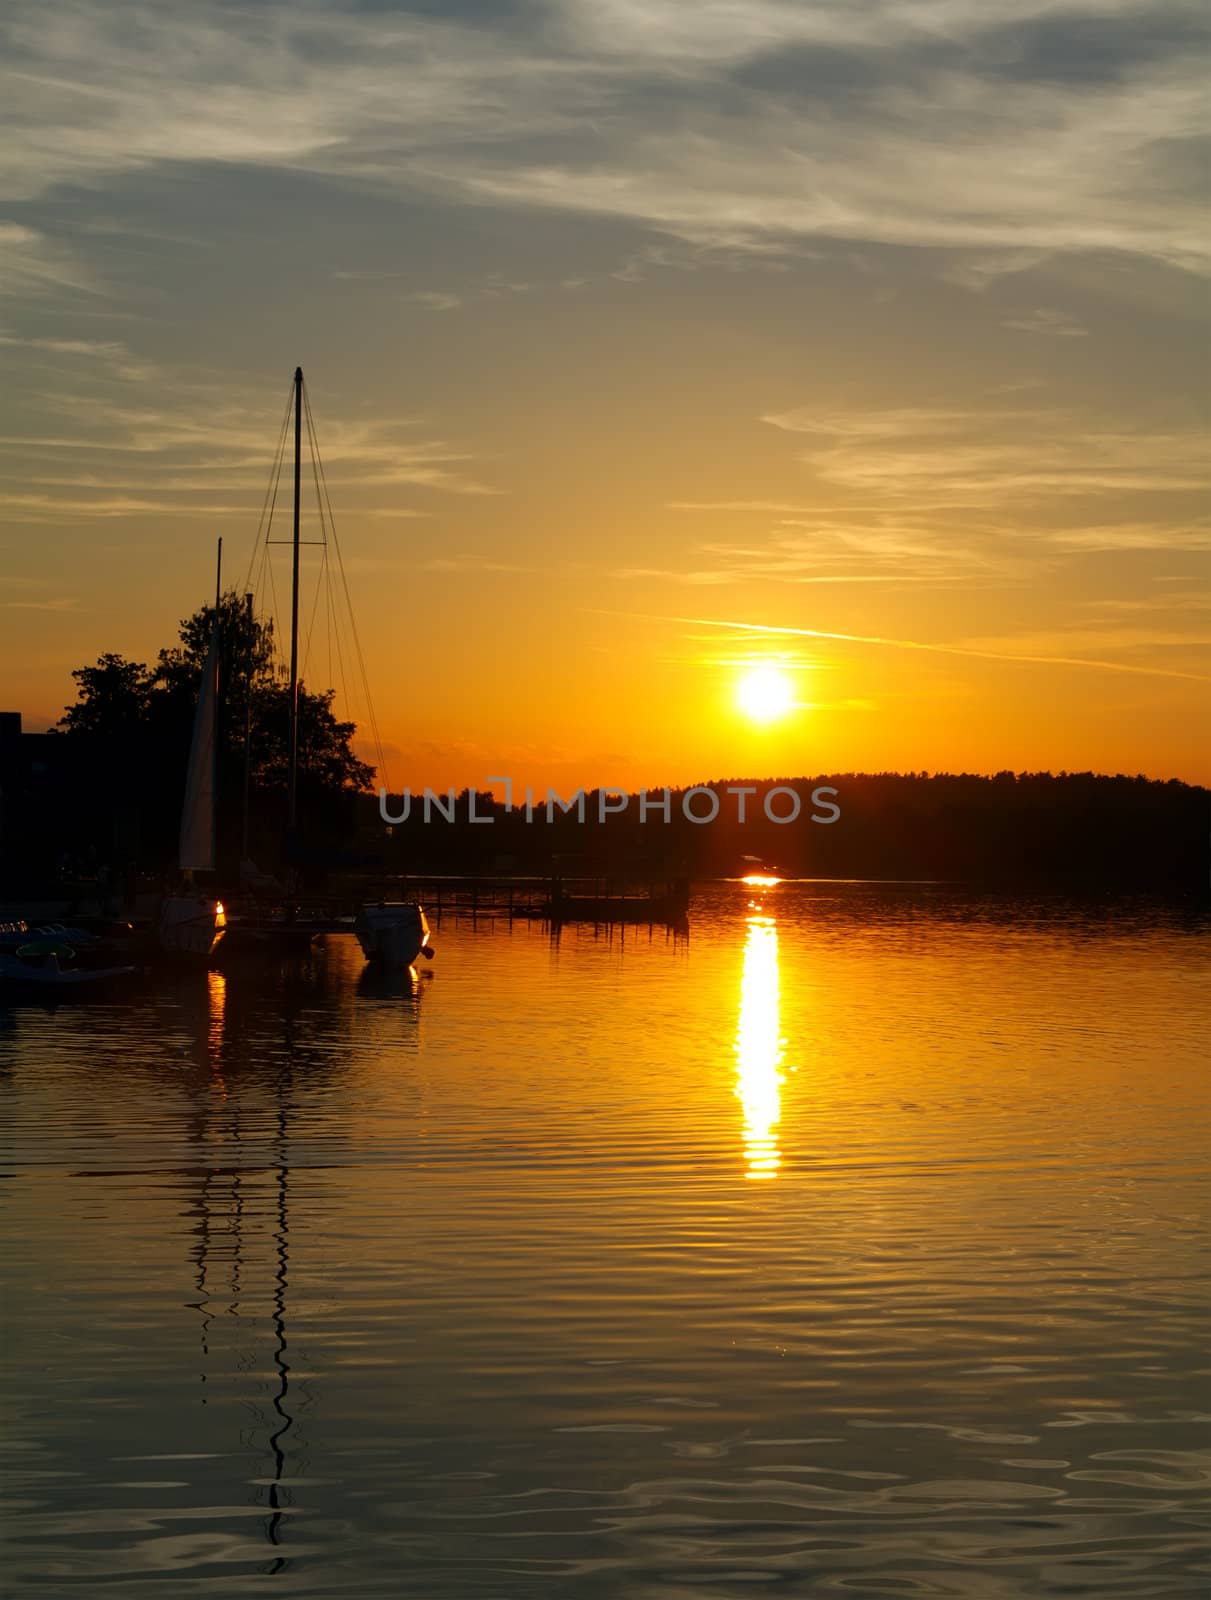 sunset on the lake, yacht by aleksaskv